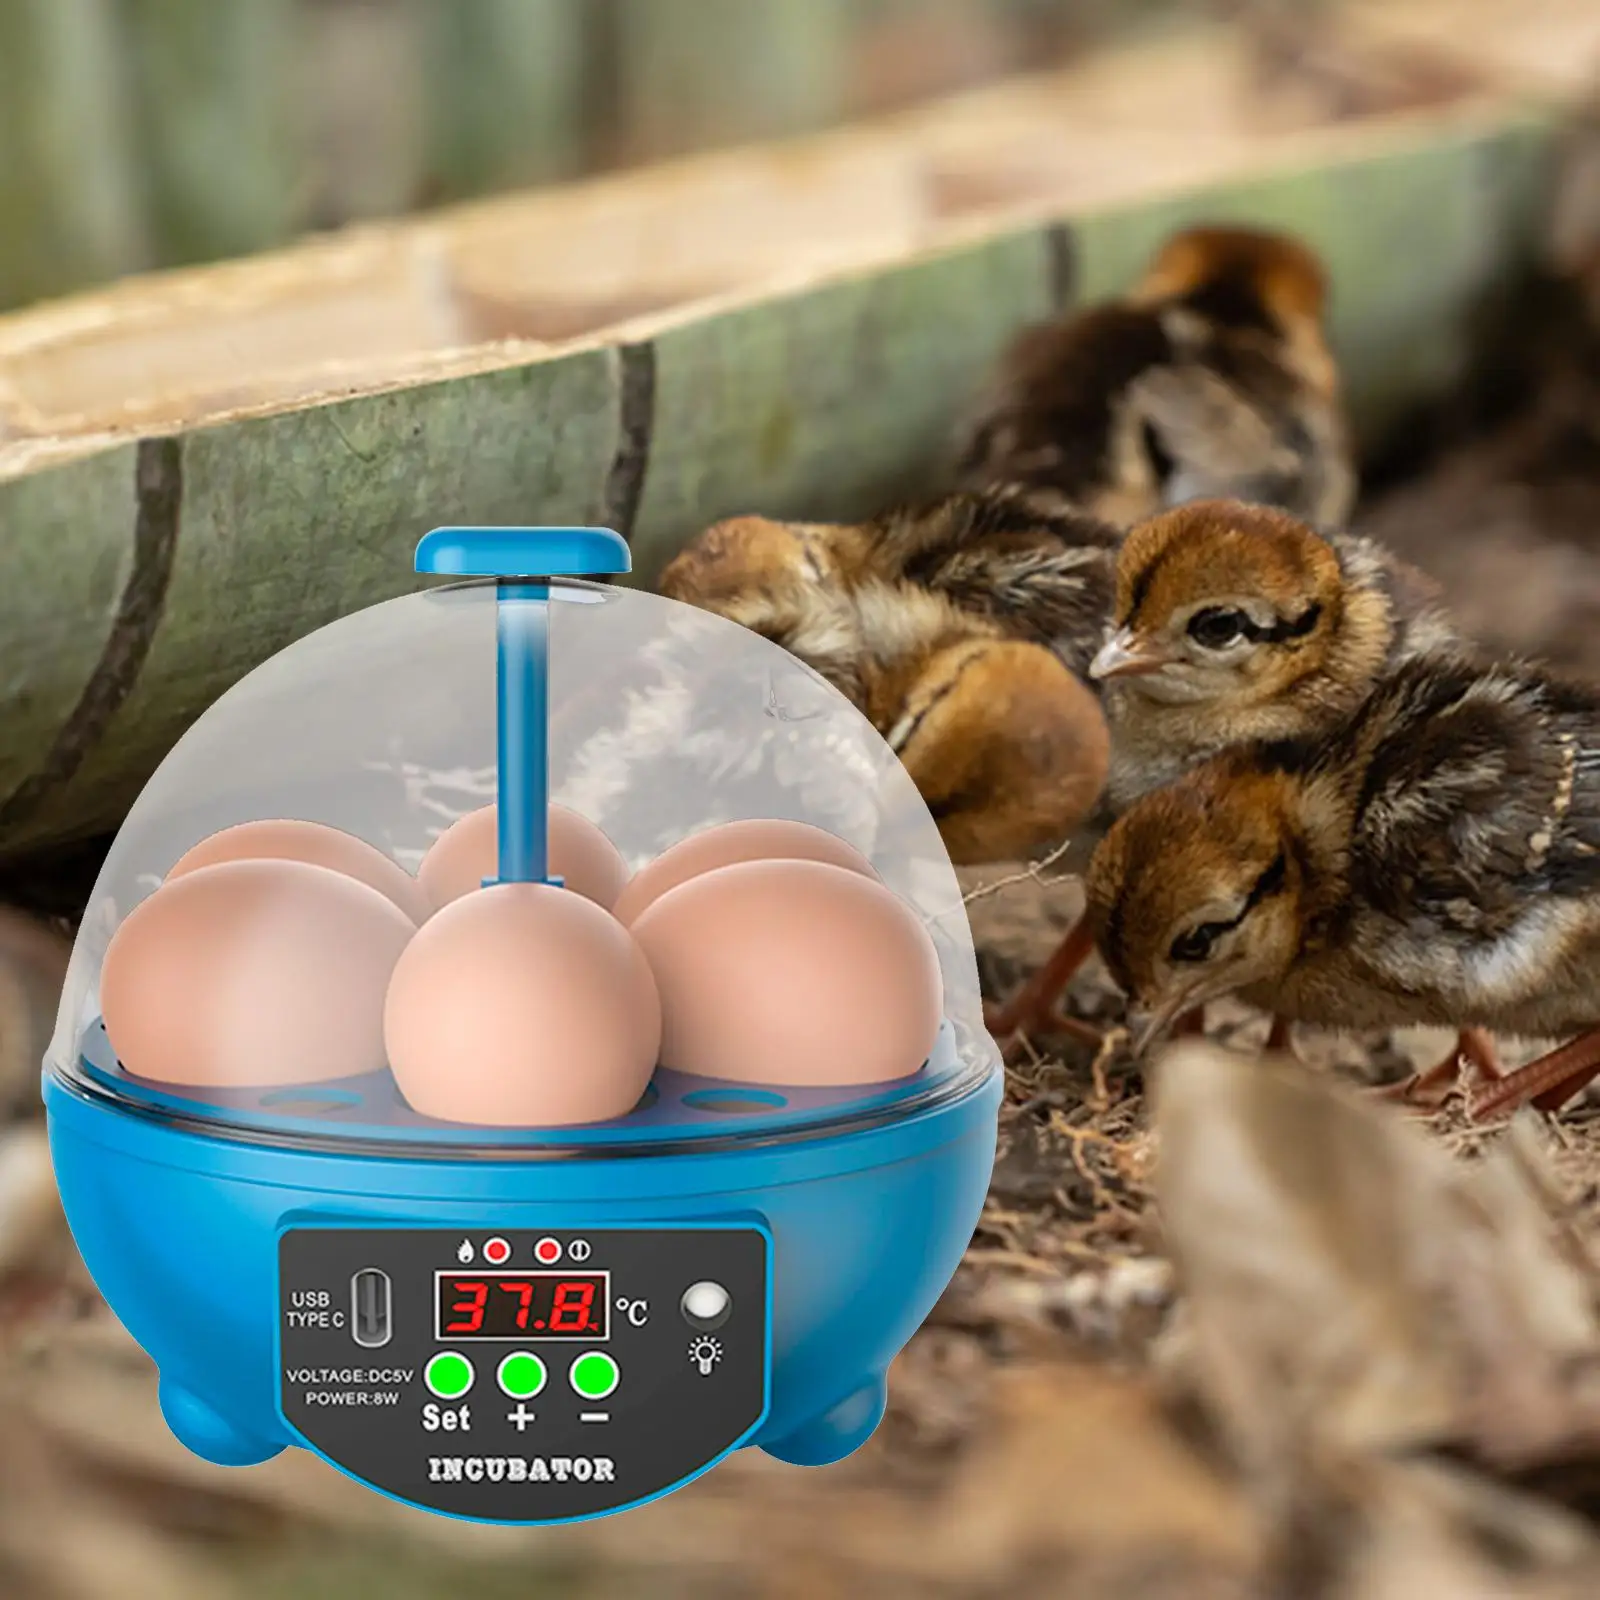 USB 6 Eggs Incubator LED Display Manual Chick Incubator for Chicken Birds